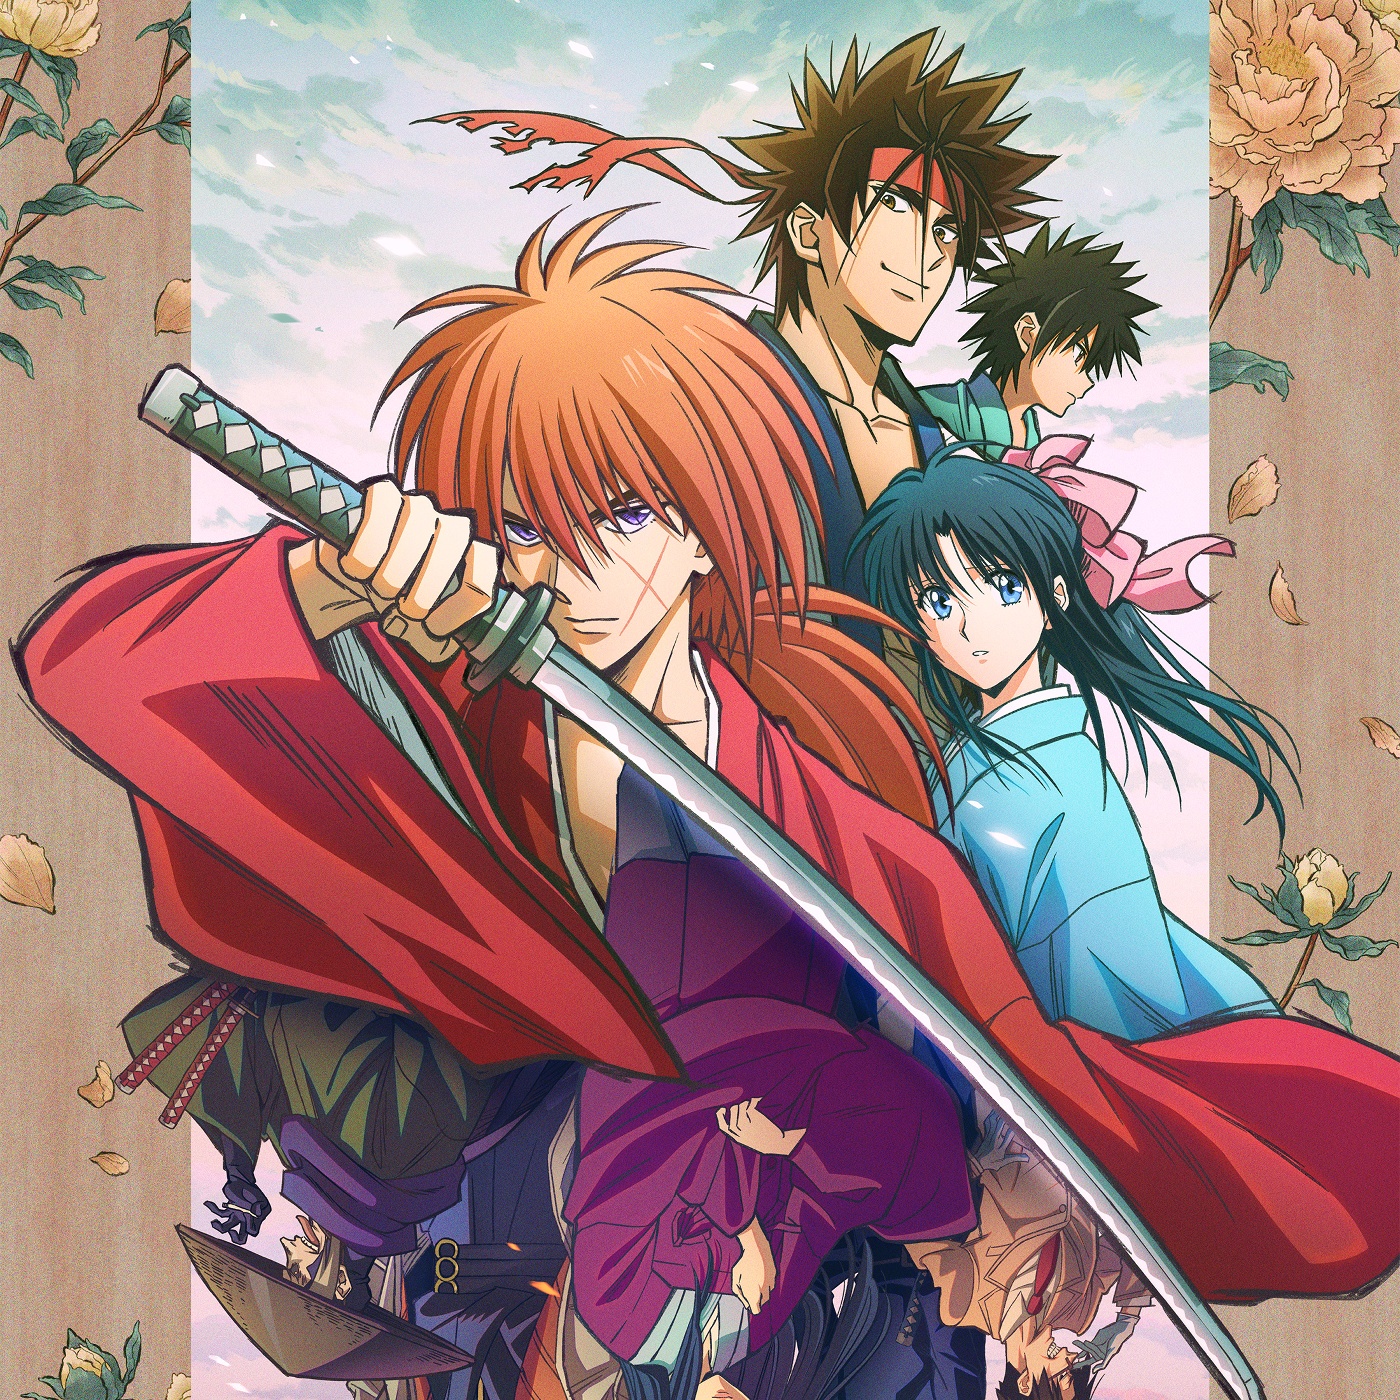 The 10 Best Samurai Anime, Ranked